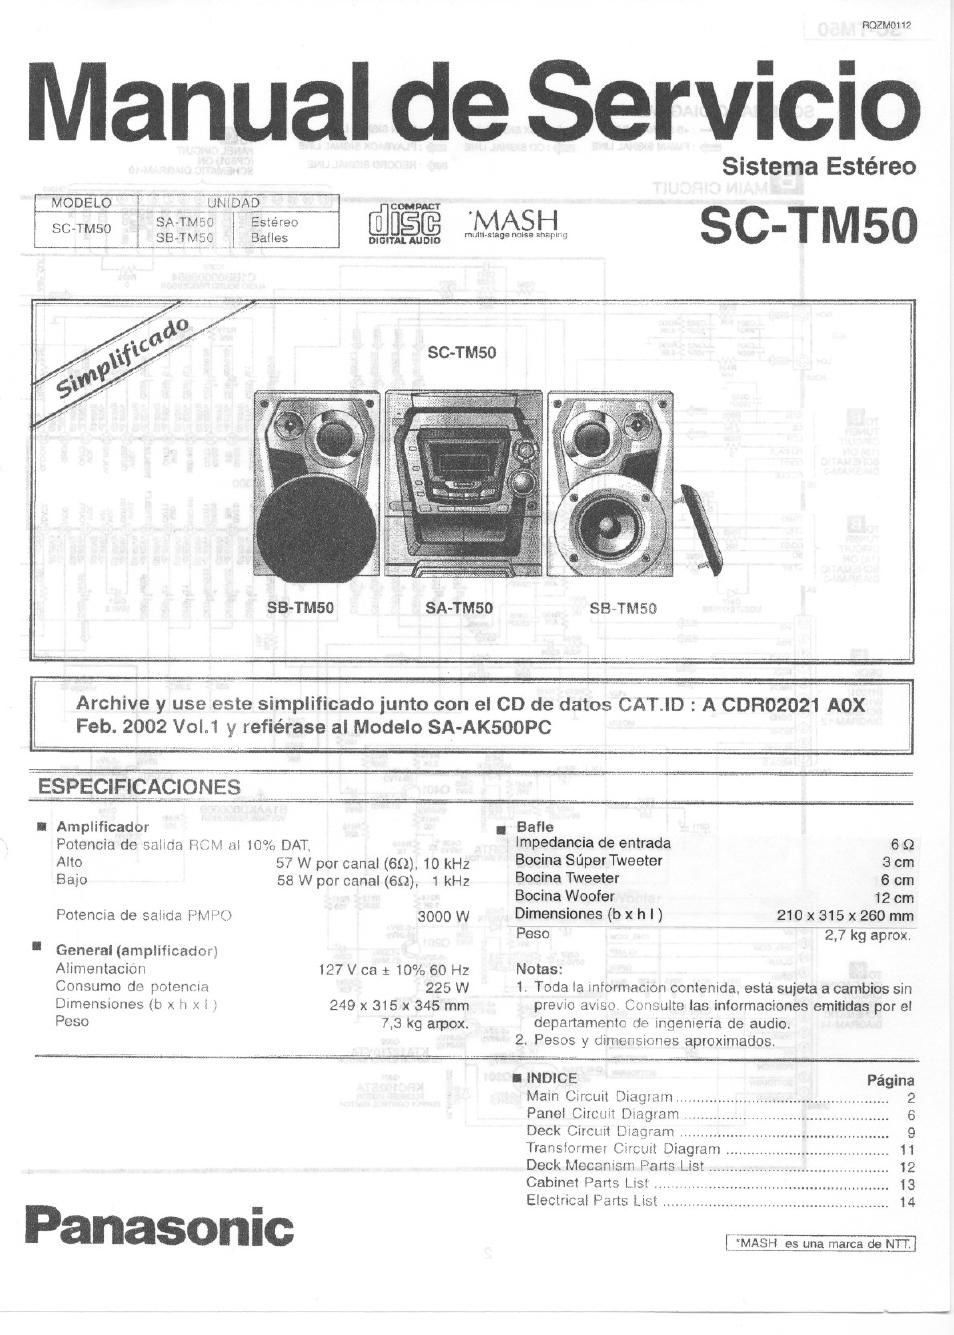 panasonic sc tm 50 service manual